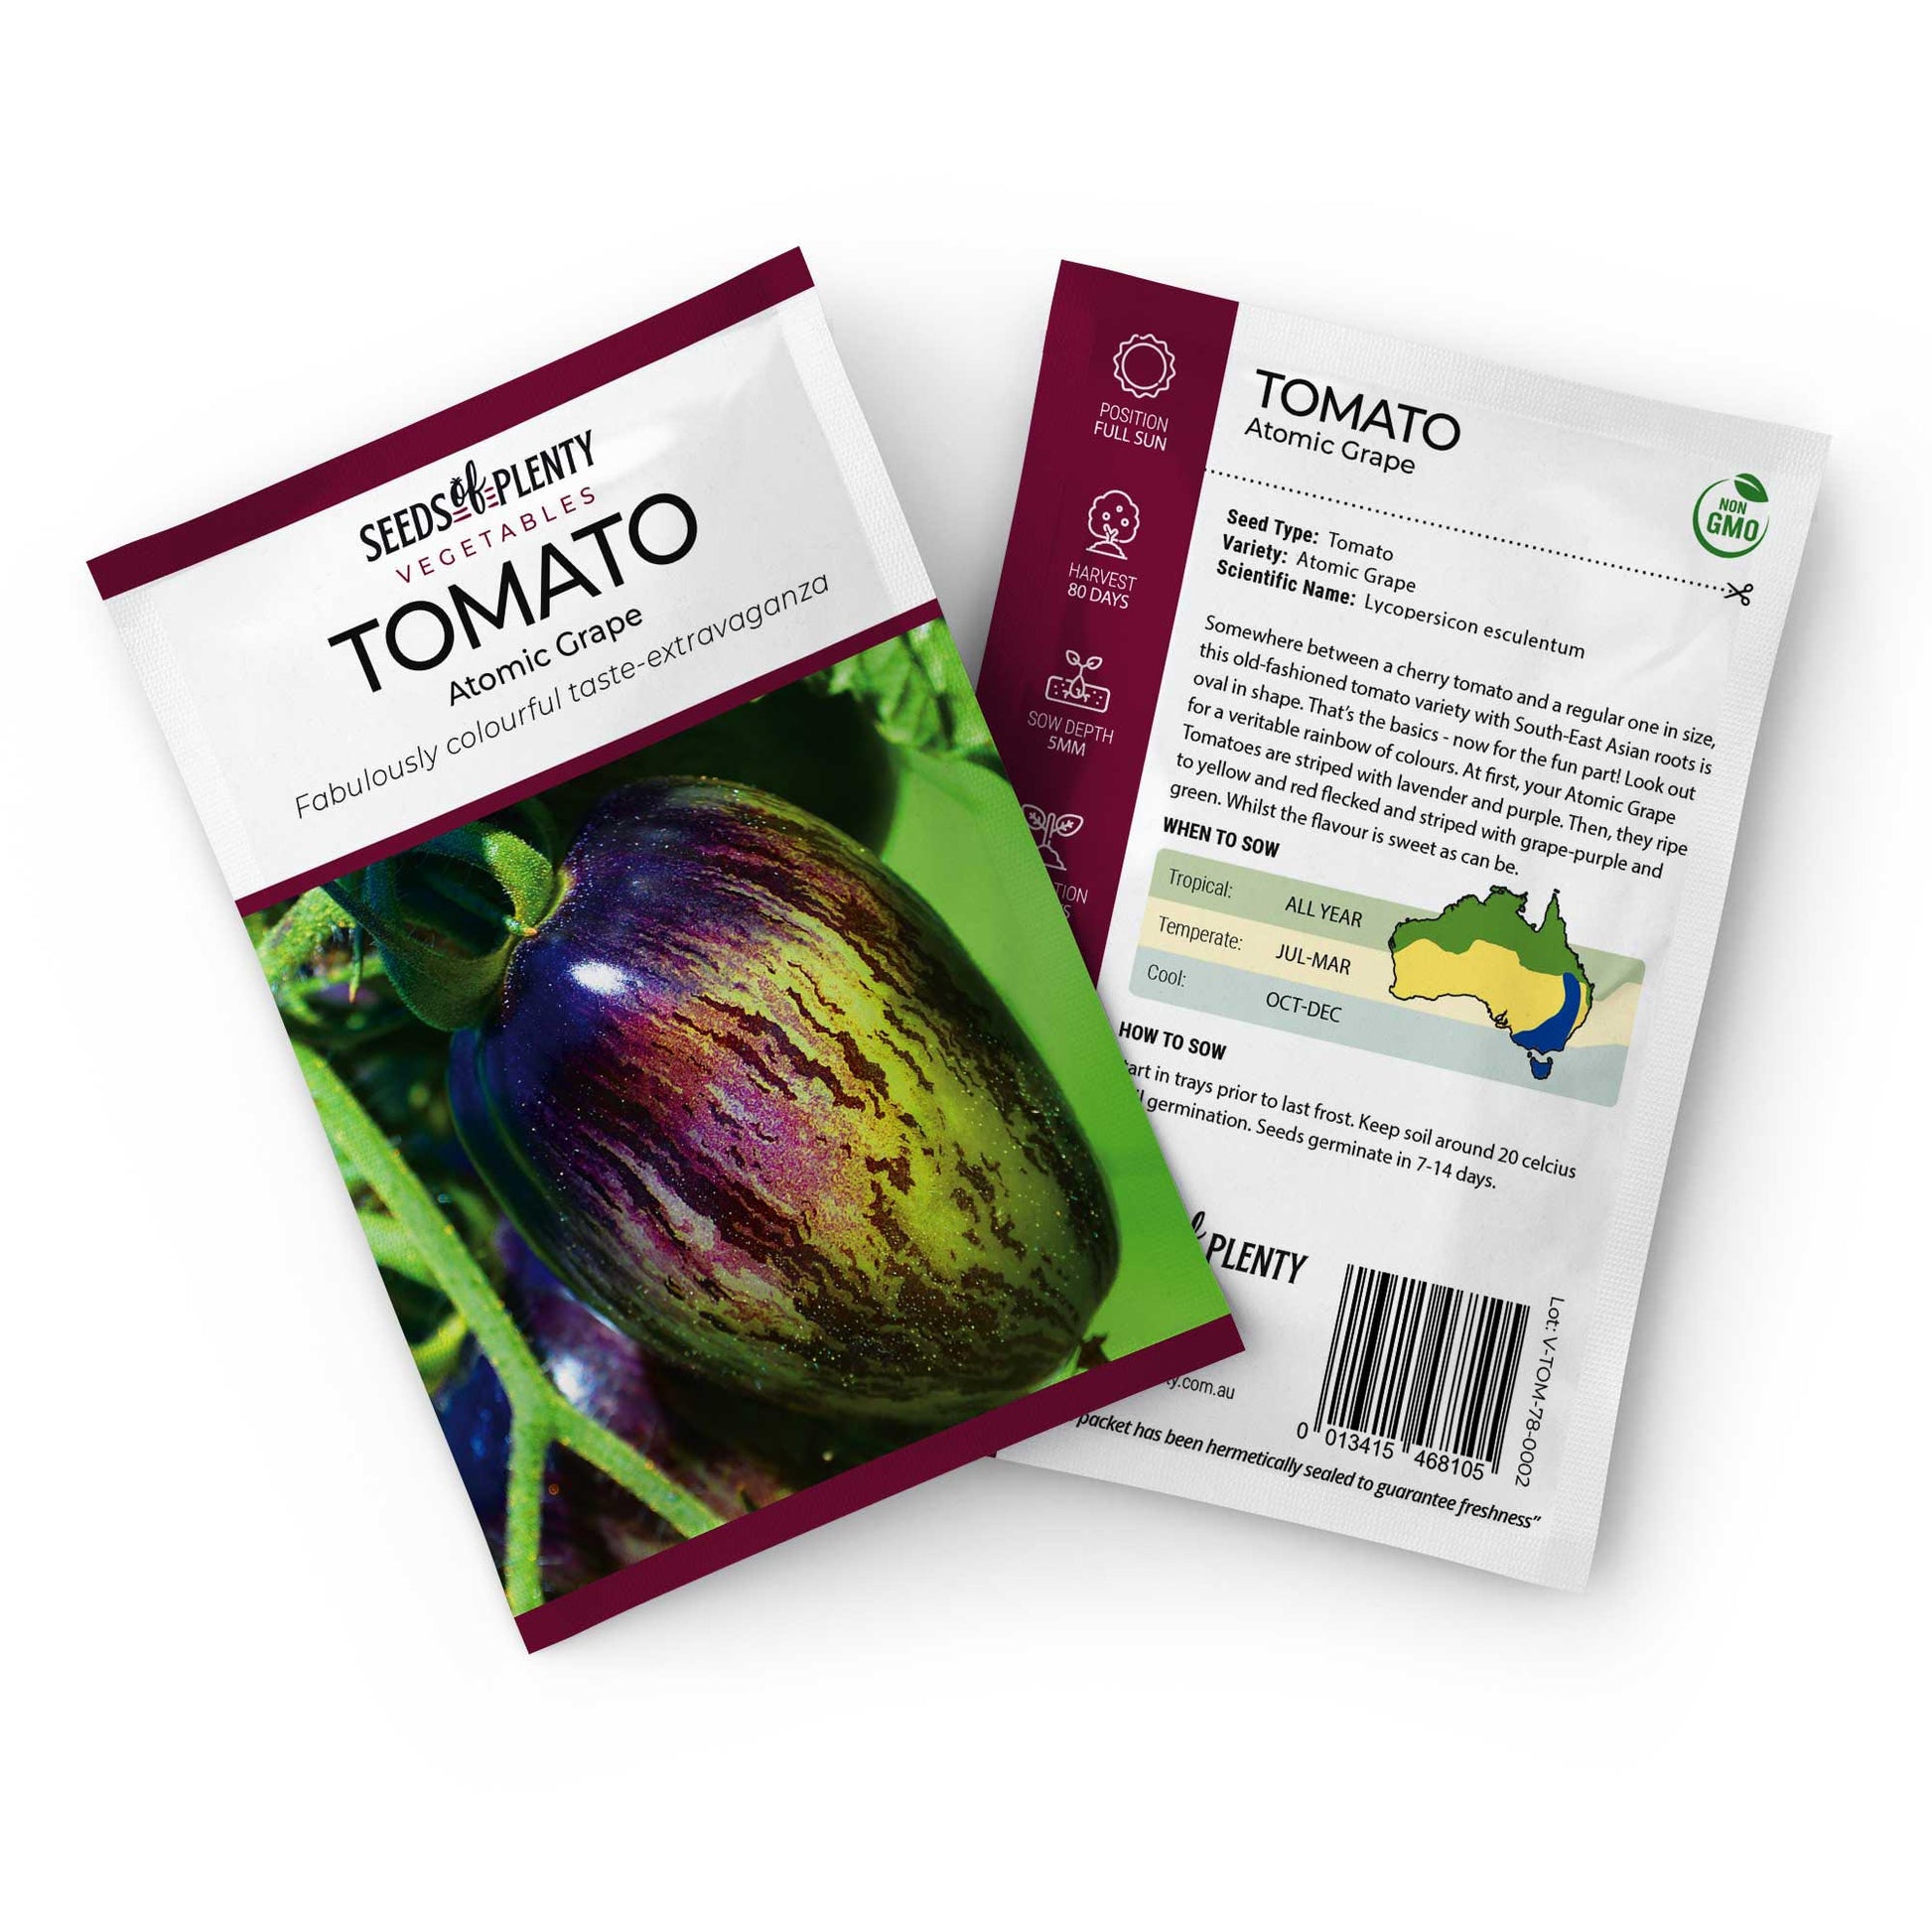 TOMATO - Atomic Grape Default Title